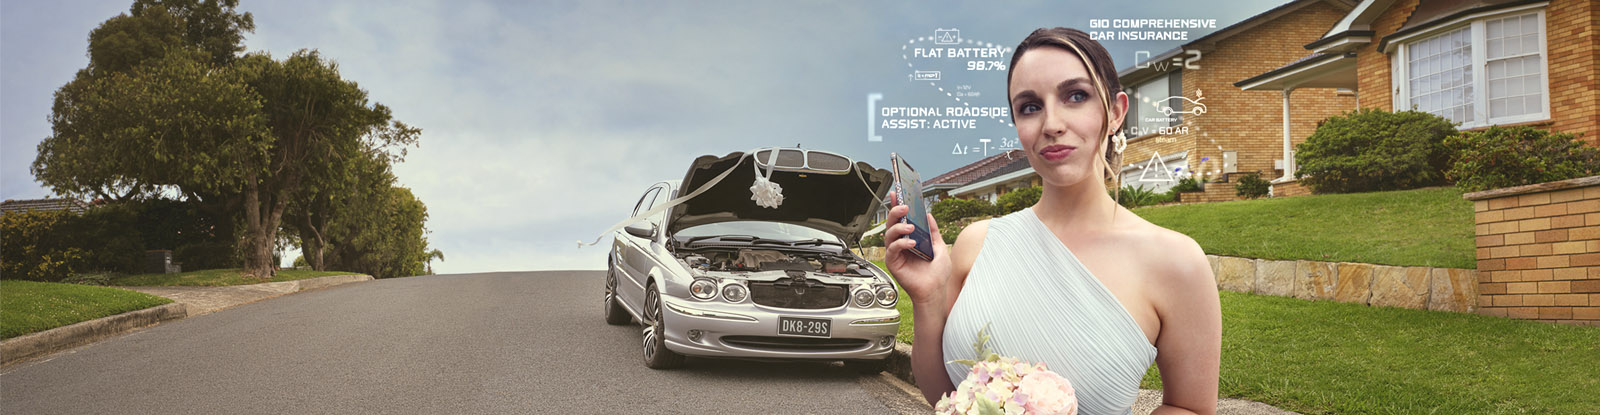 Woman in wedding dress with broken down car